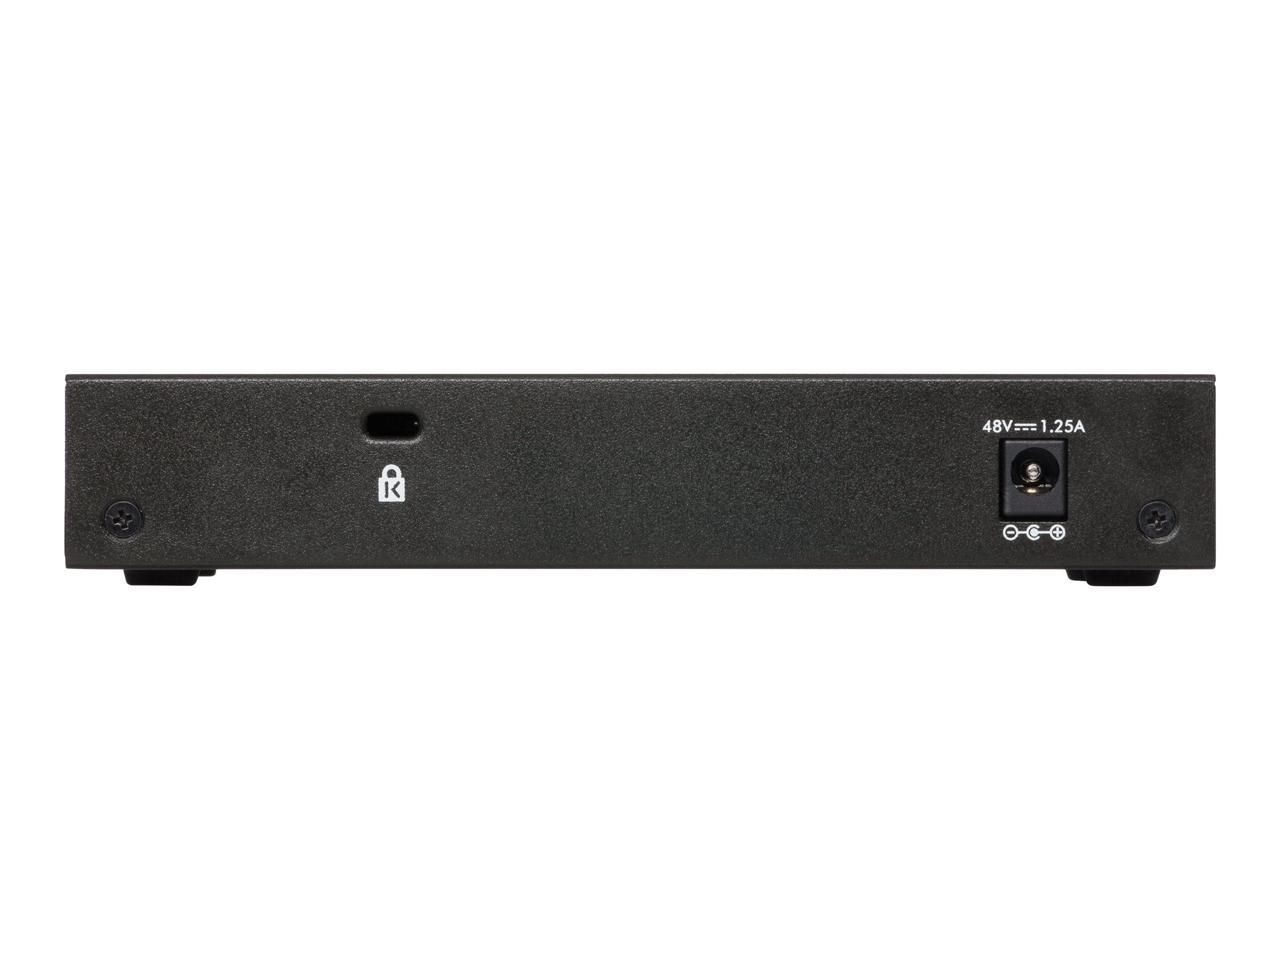 NET-GS308P-100NAS8-Port Gigabit Ethernet Switch 4 POE